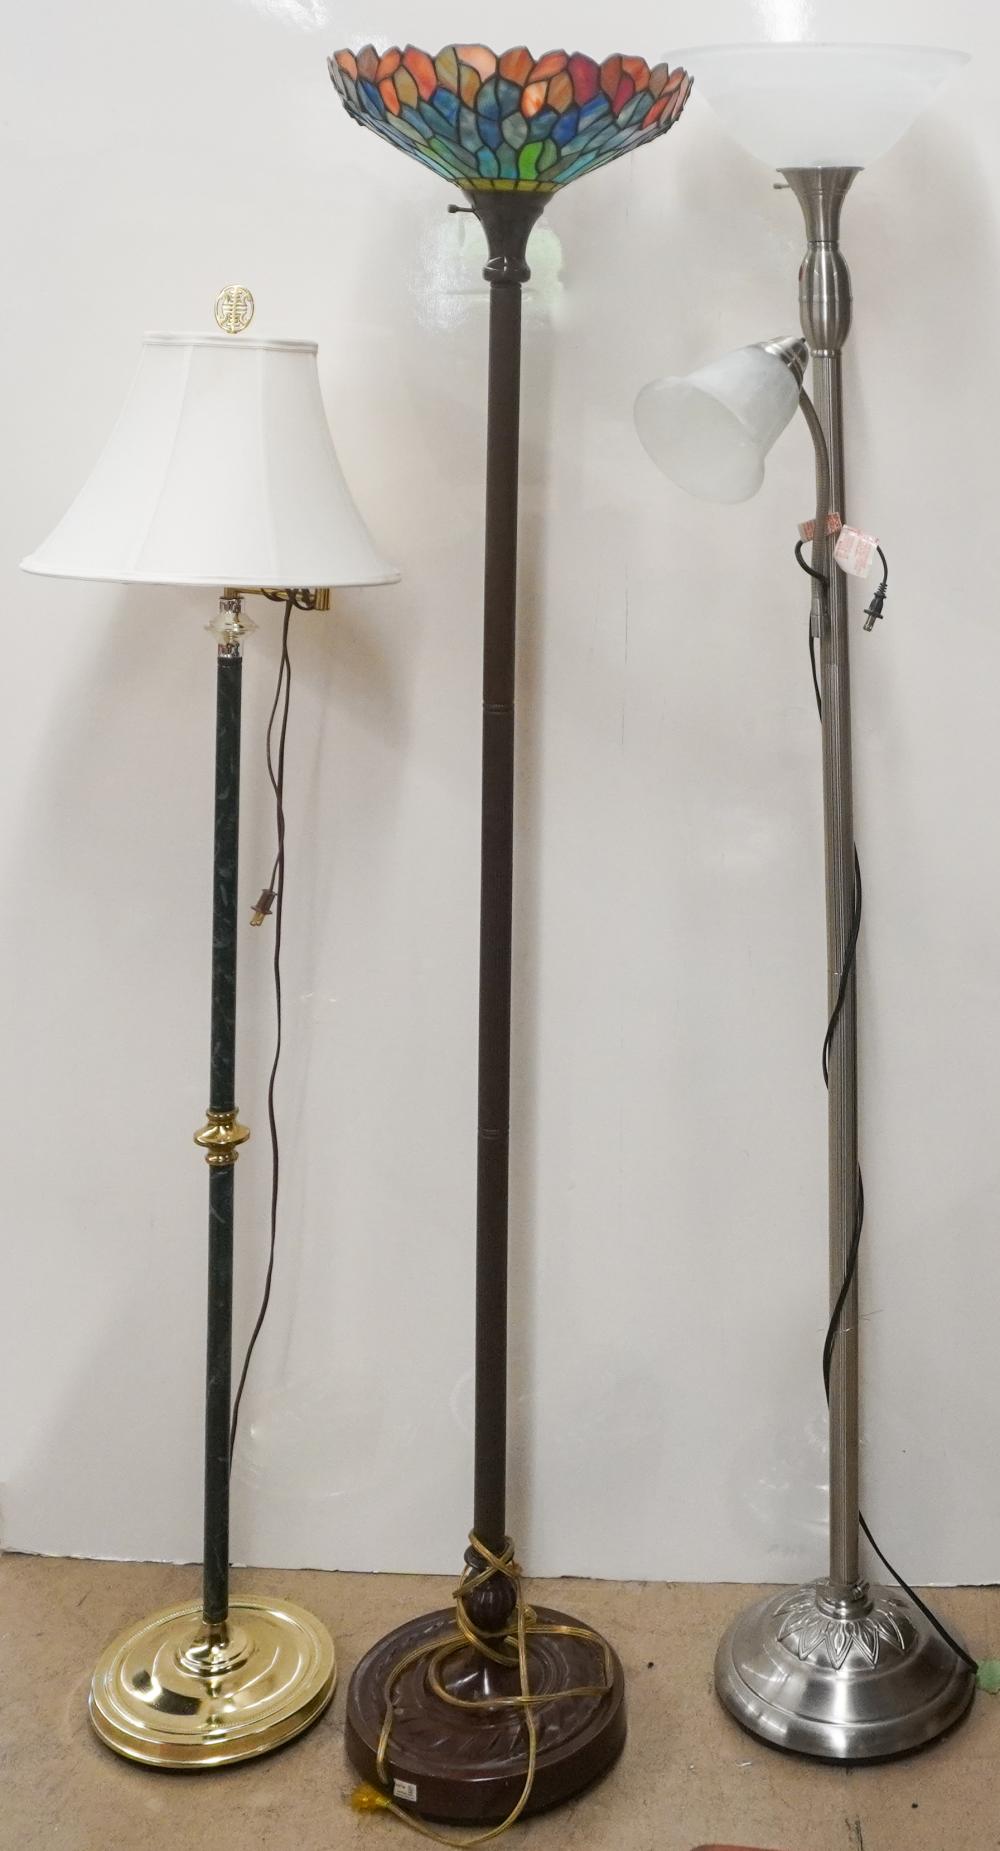 THREE ASSORTED FLOOR LAMPS INCLUDING 2e7c91